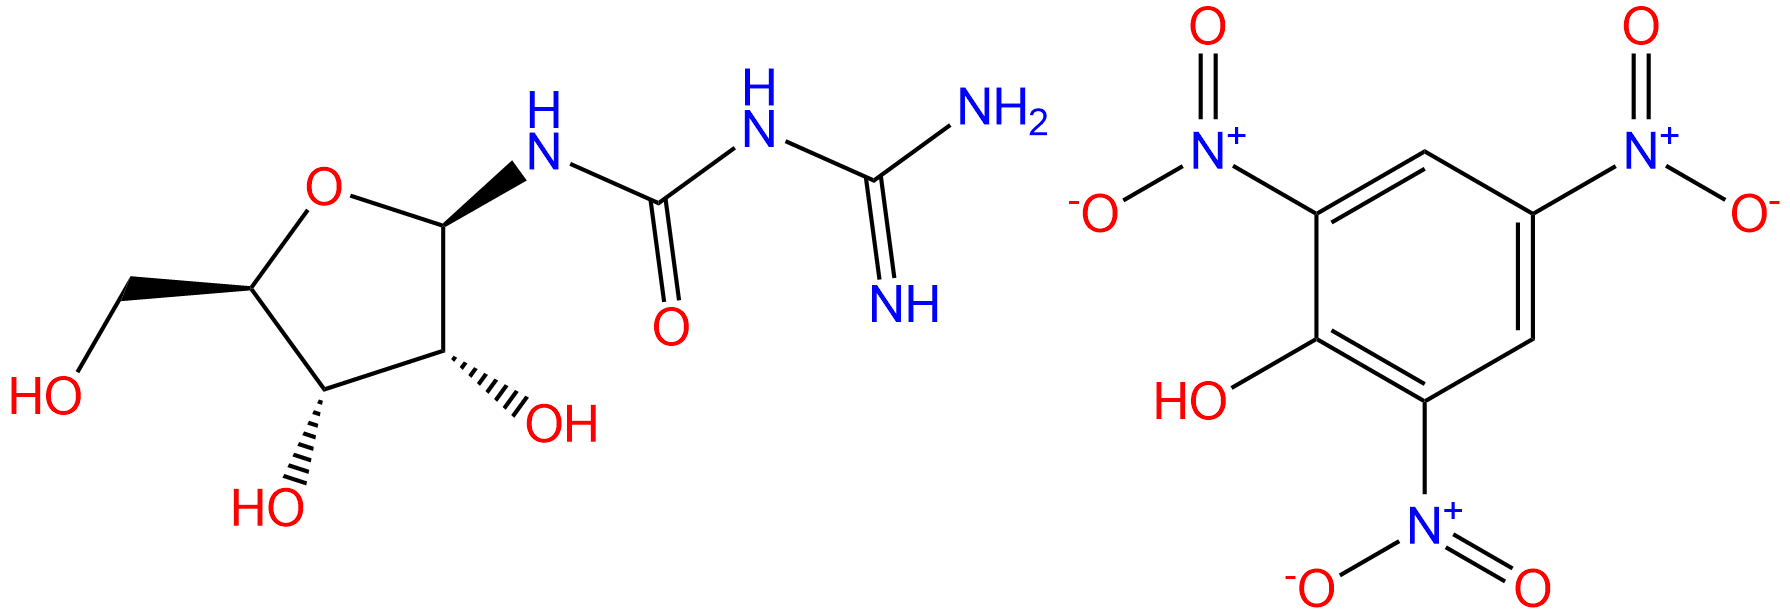 Azacitidine Impurity, Impurity of Azacitidine, Azacitidine Impurities, 4336-46-3, Azacitidine Related Compound C